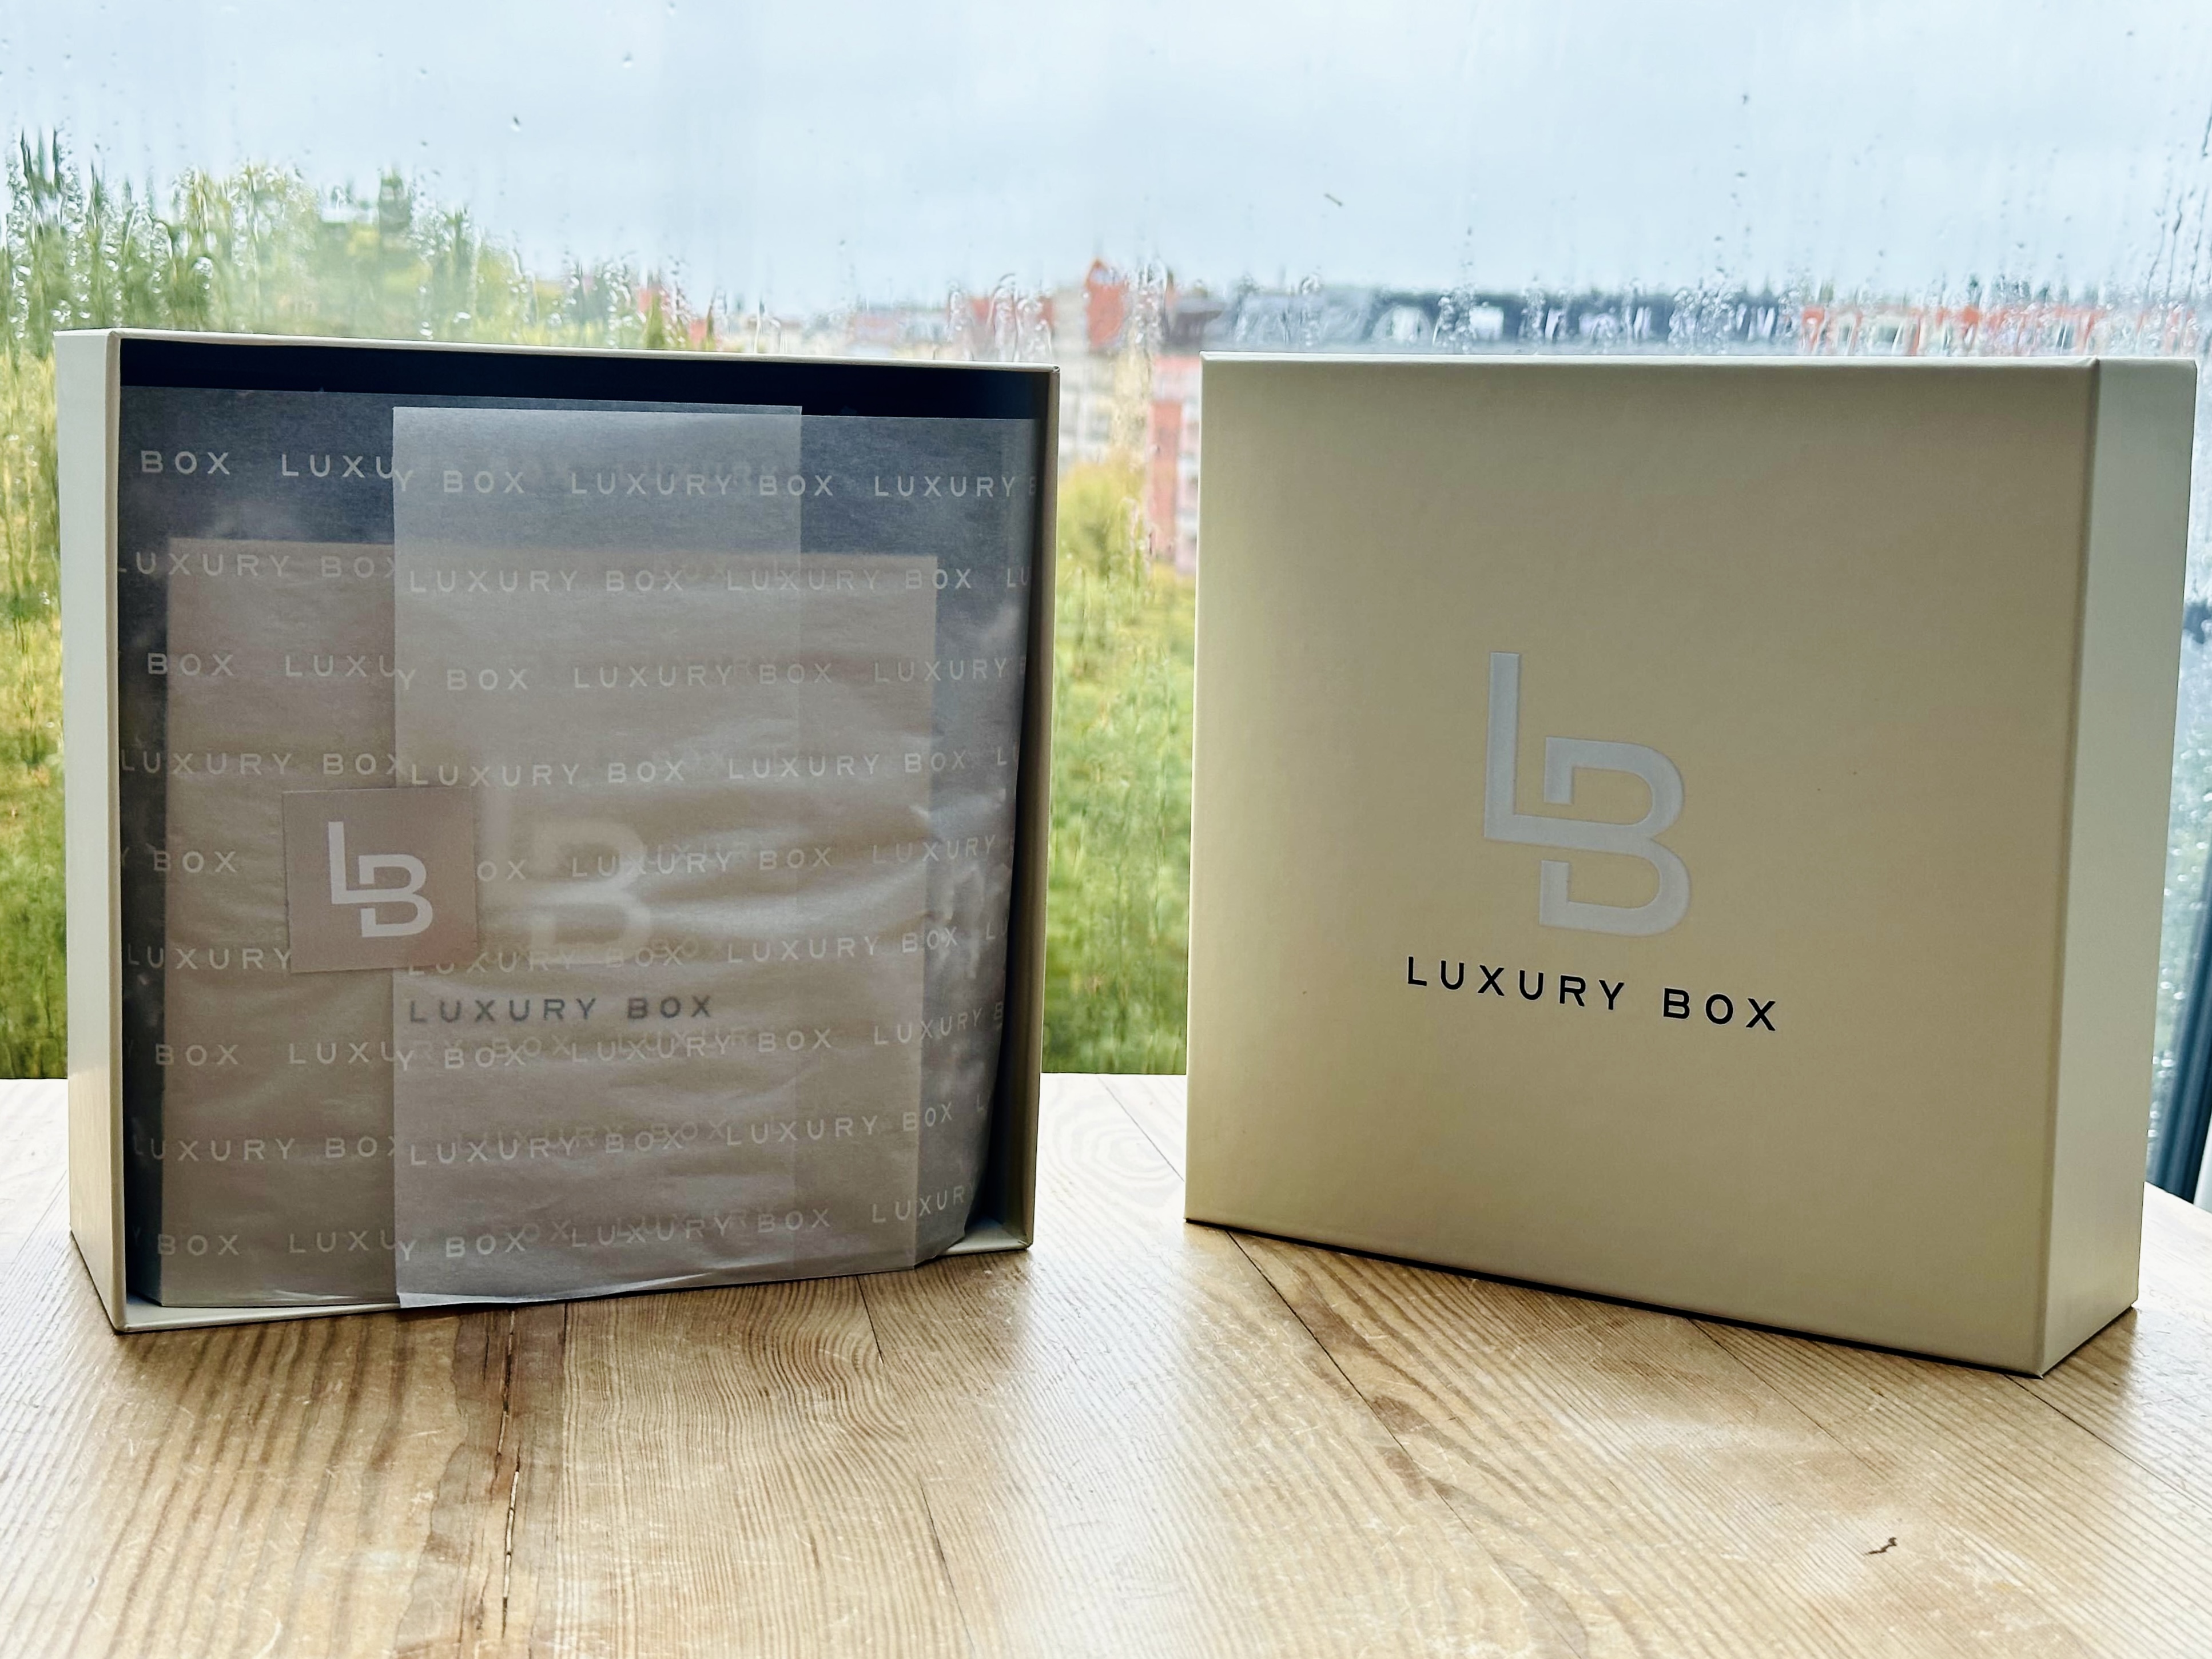 luxury-box-beautybox.jpg (1.86 MB)